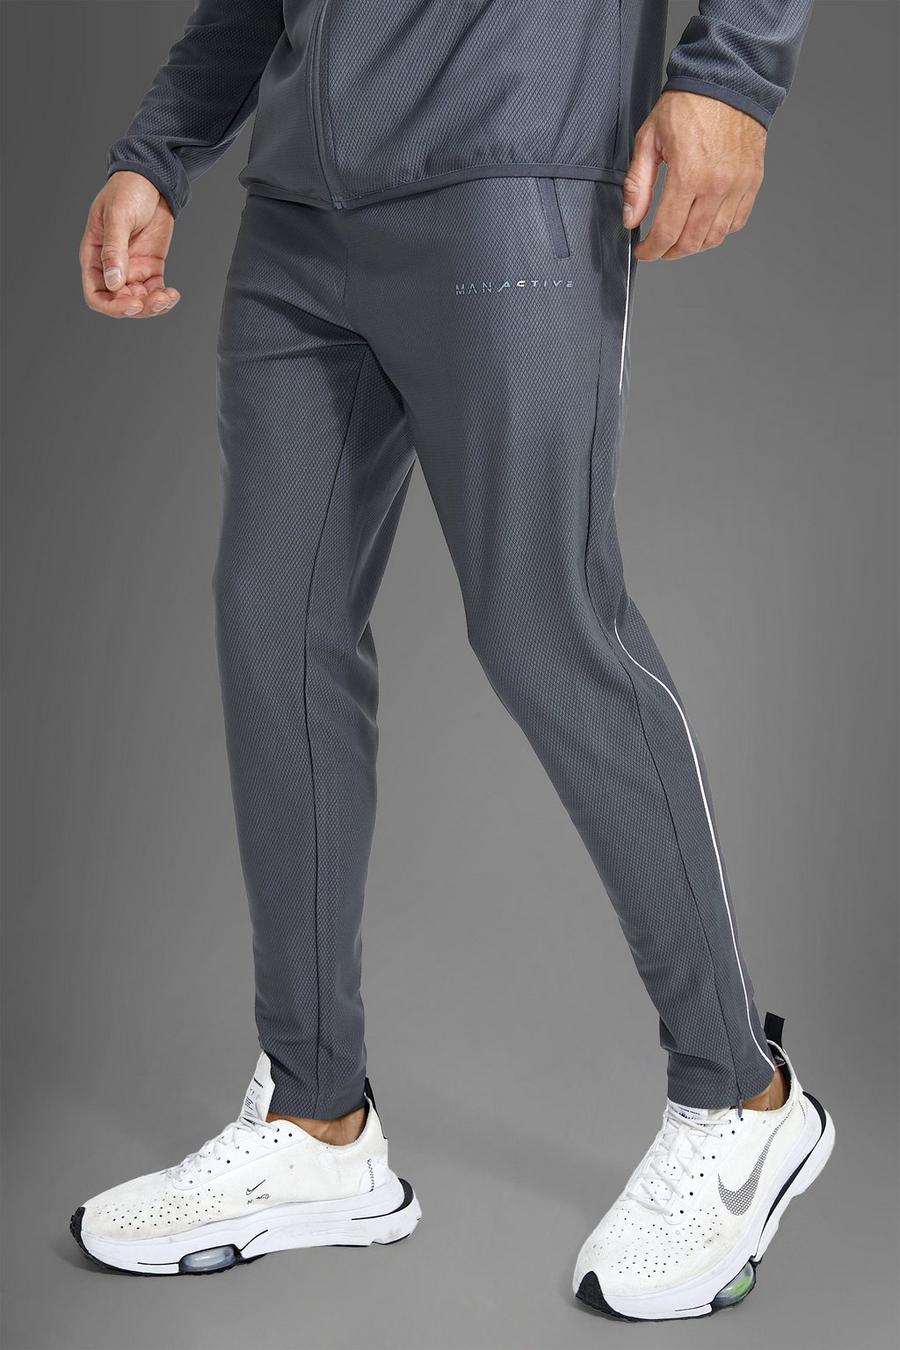 Pantaloni tuta Man Active Gym con cordoncino riflettente, Grey image number 1